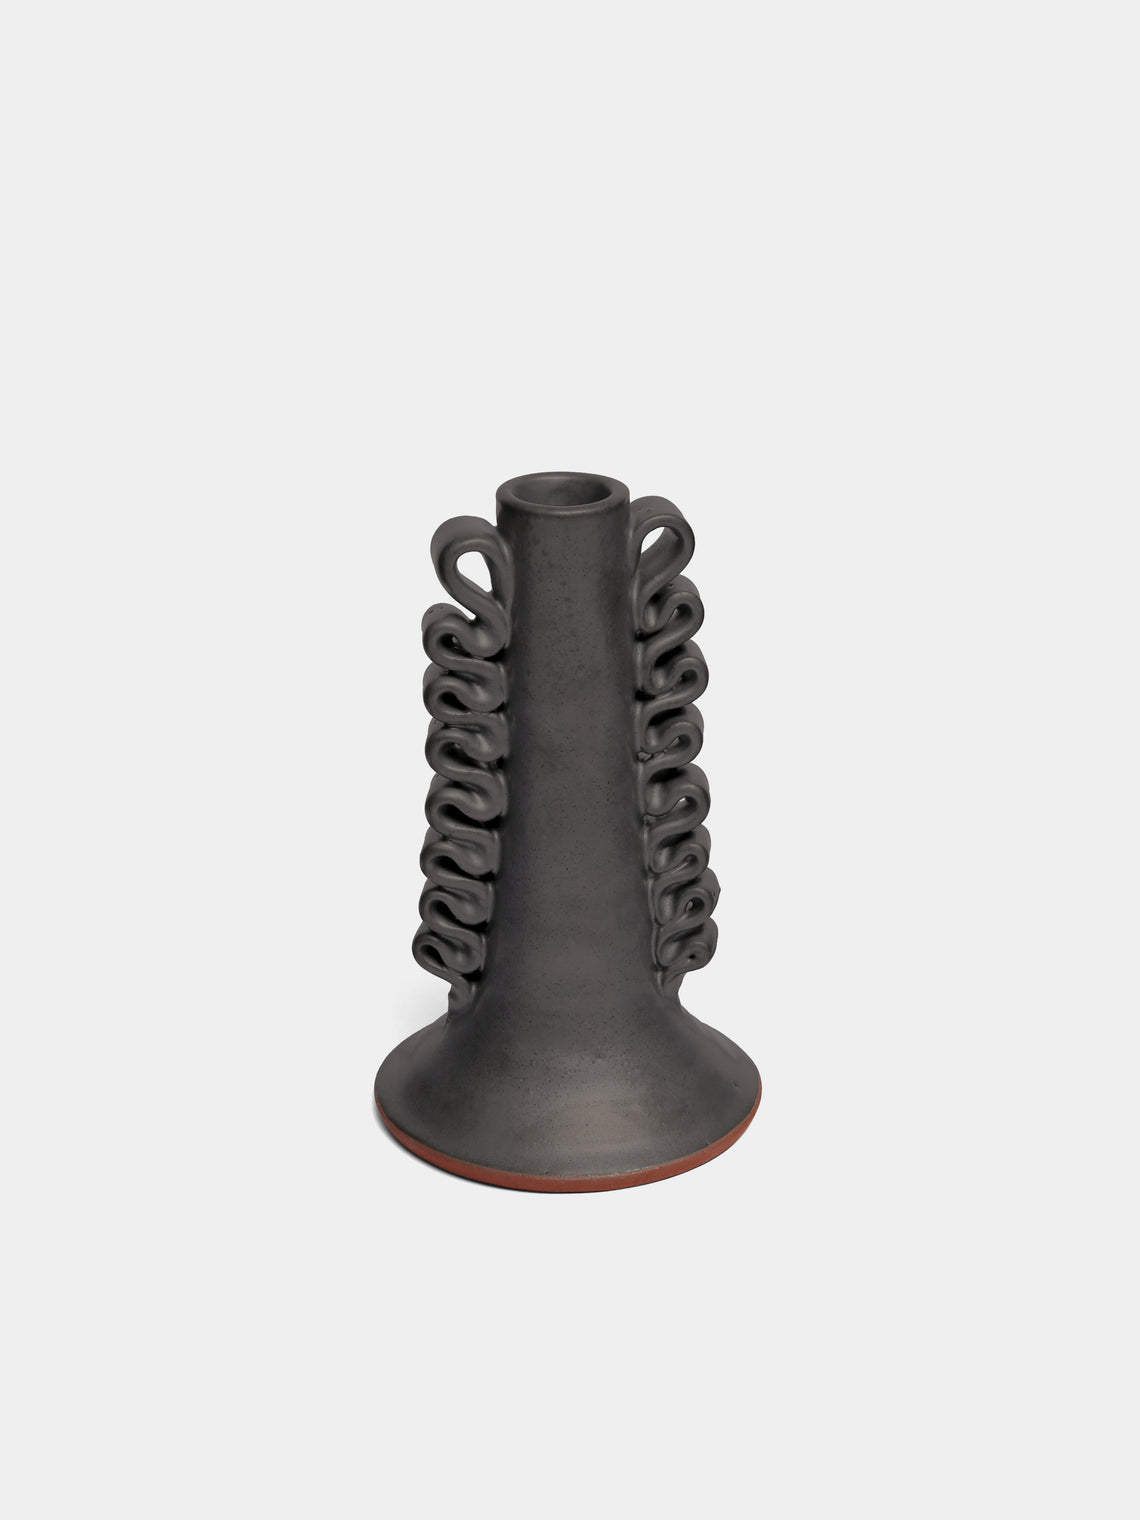 Perla Valtierra - Ribete Hand-Glazed Ceramic Small Candle Holder - Black - ABASK - 